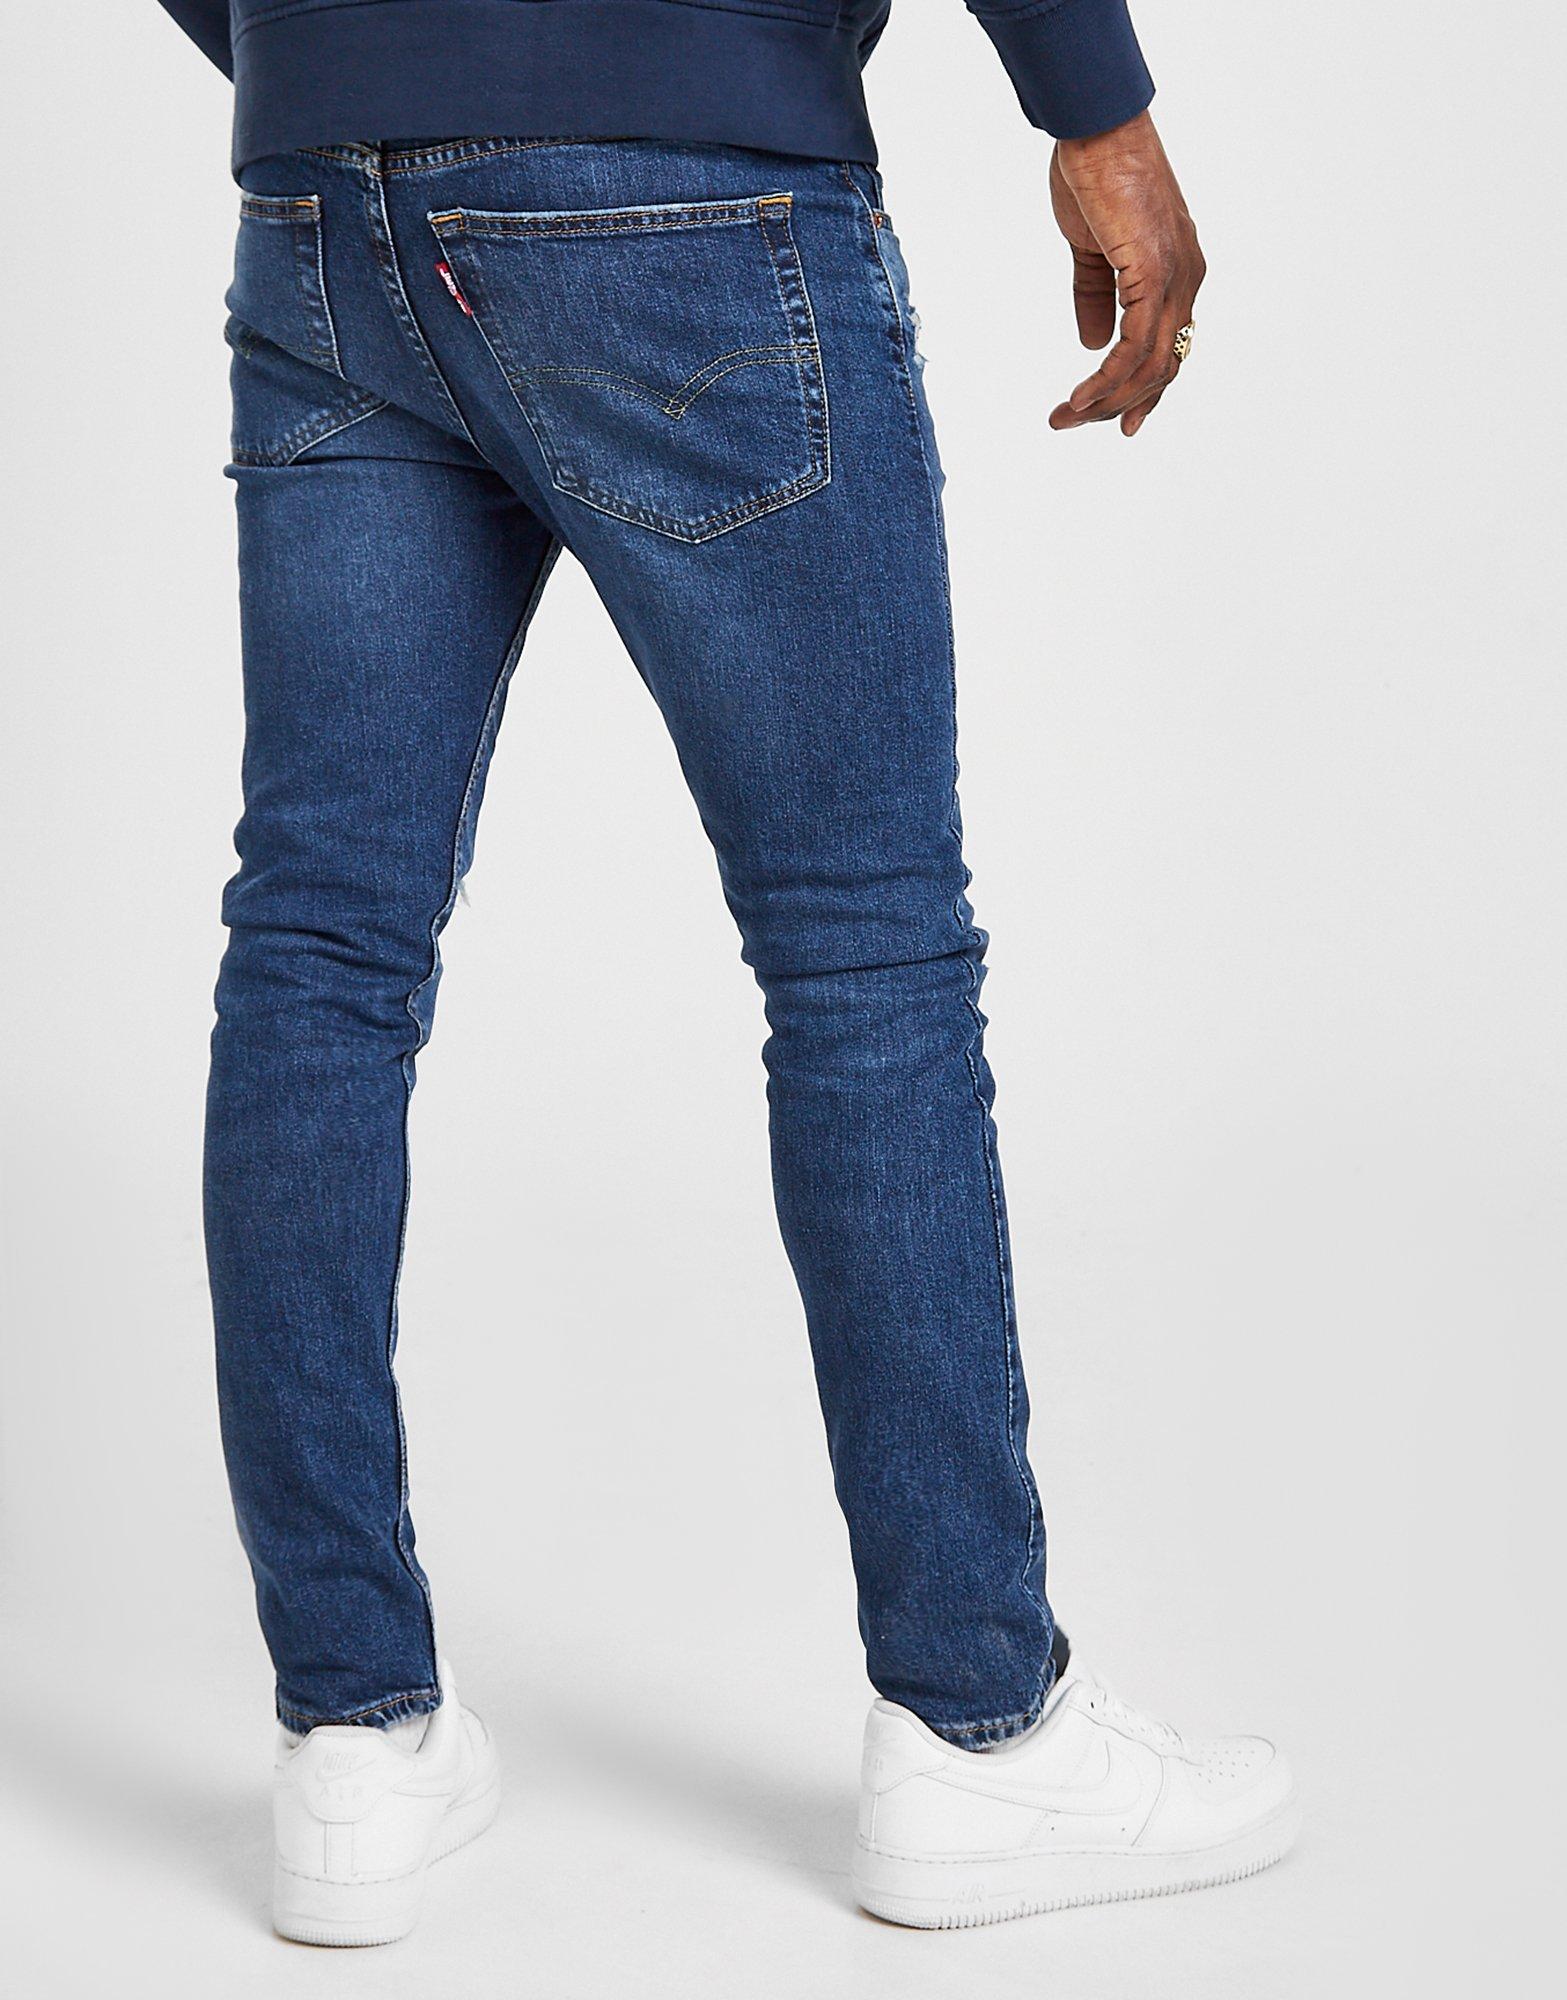 levi's distressed jeans